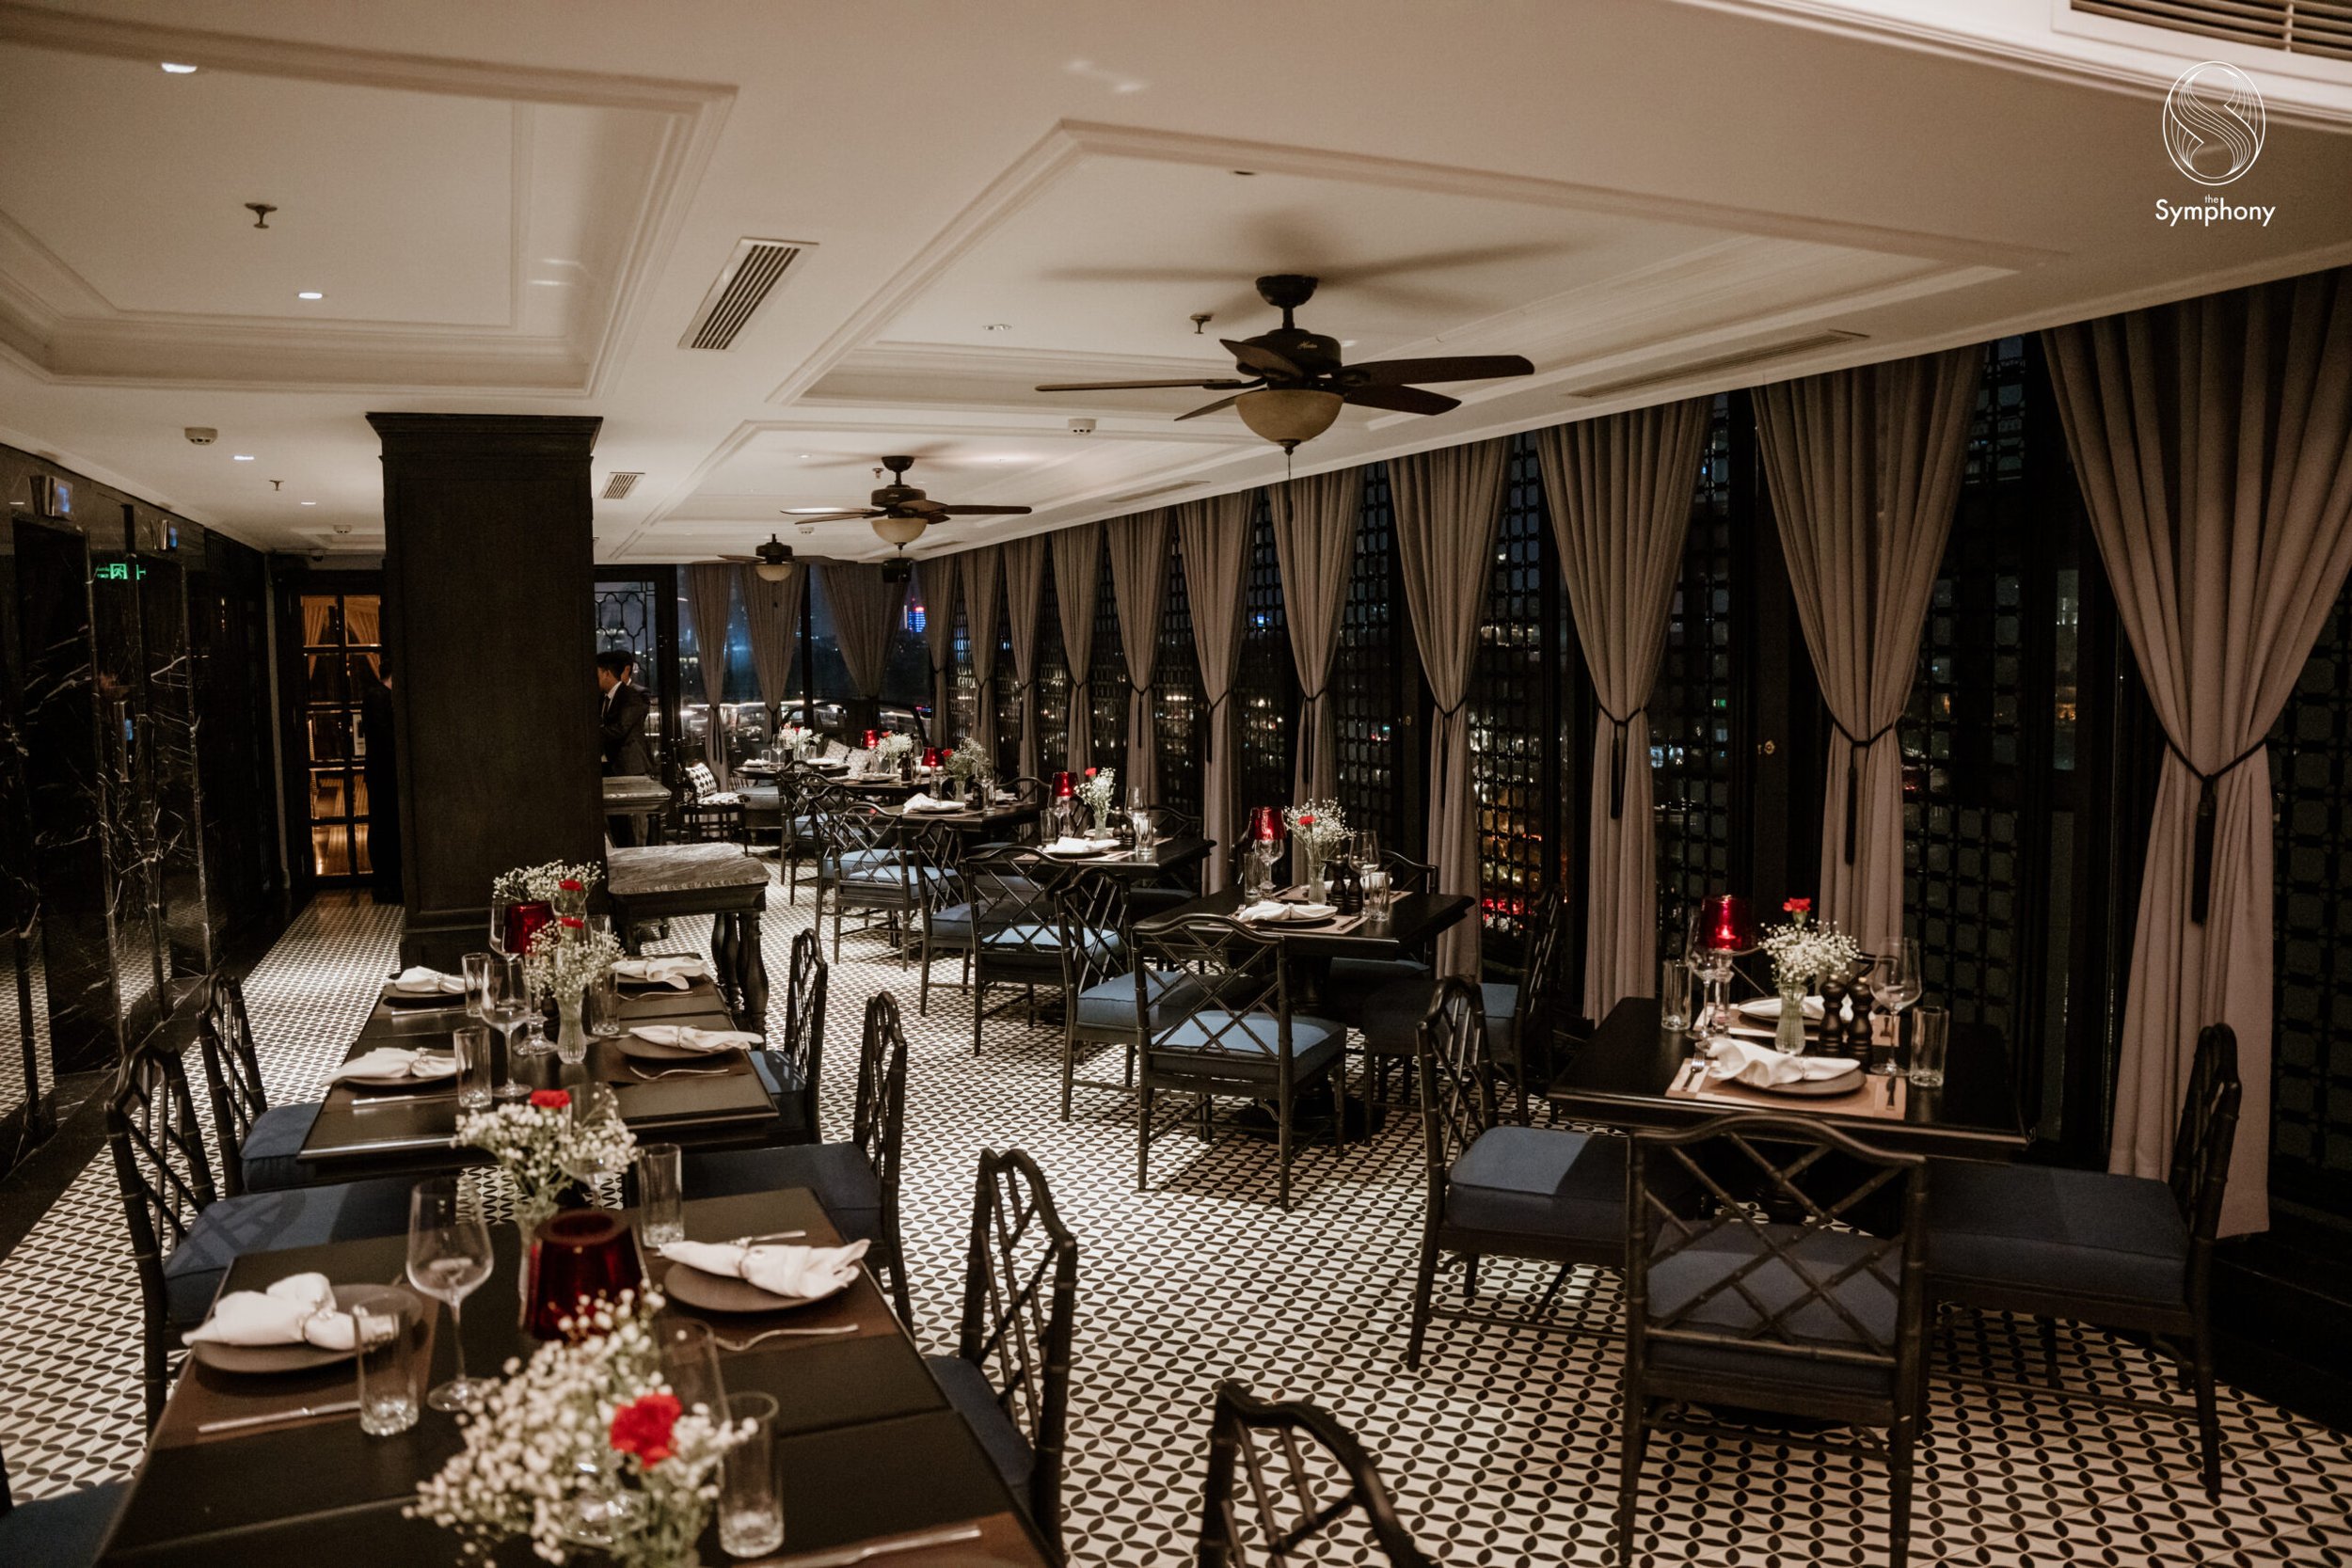 table-2-the-symphony-restaurant-scaled.jpg